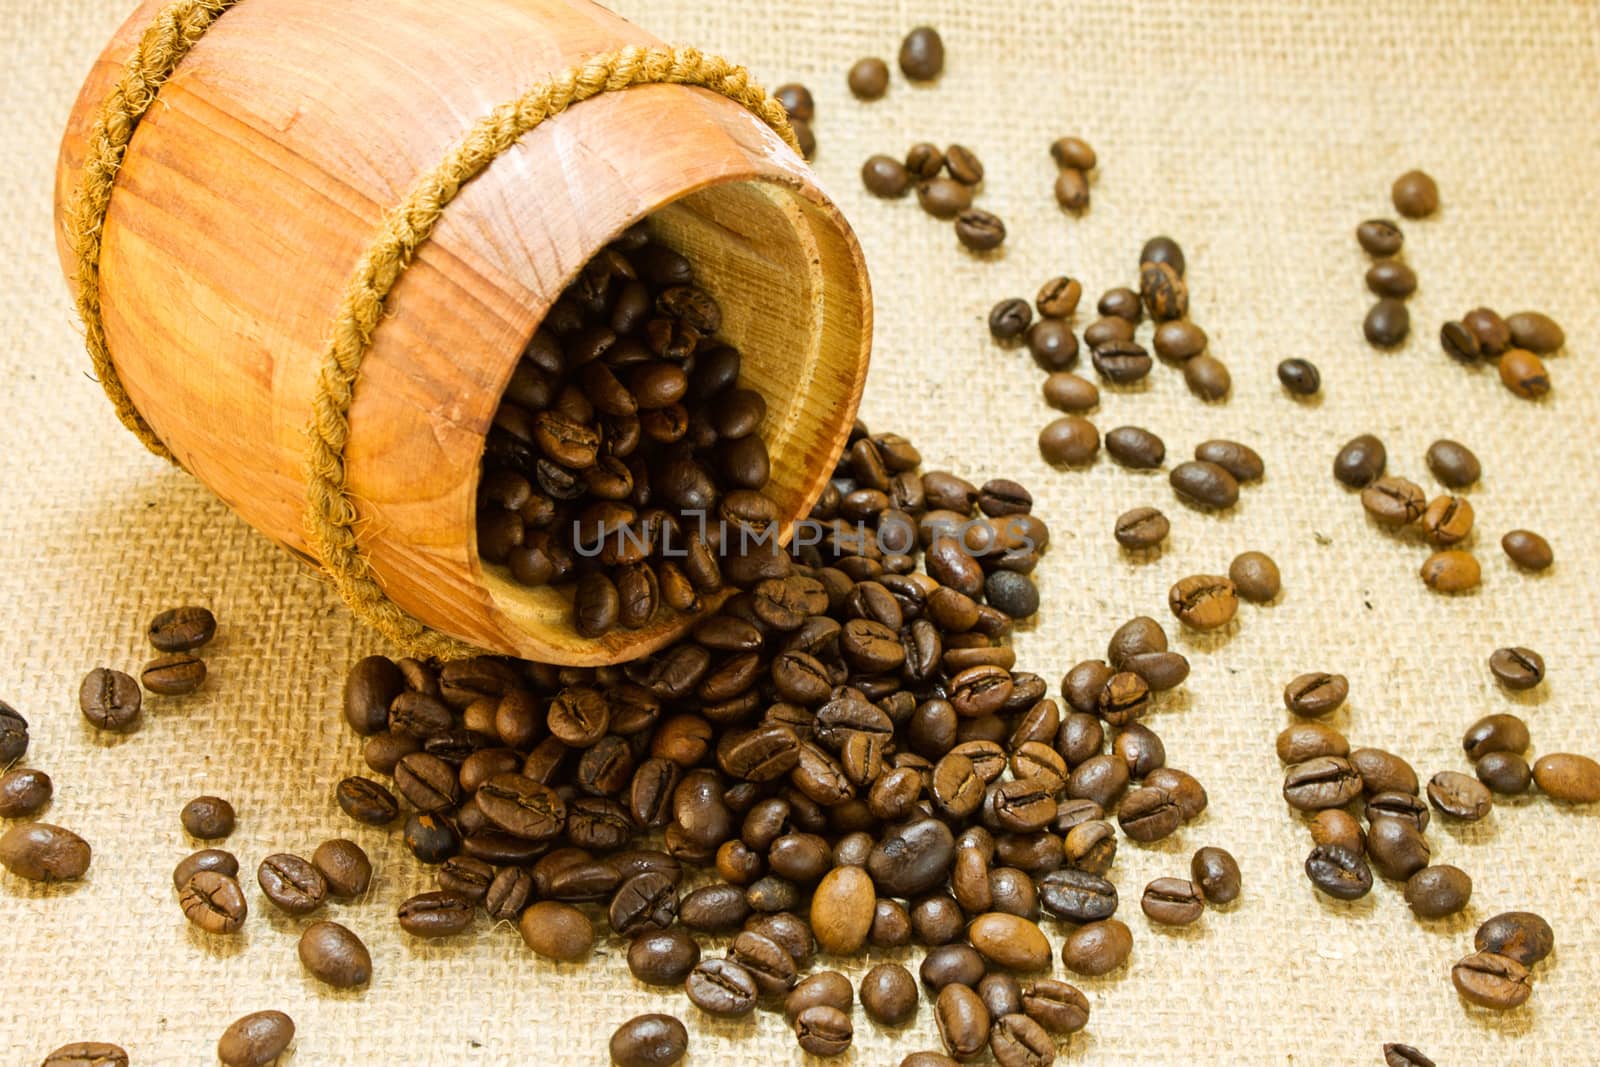 Coffee beans in a wooden keg by LenoraA